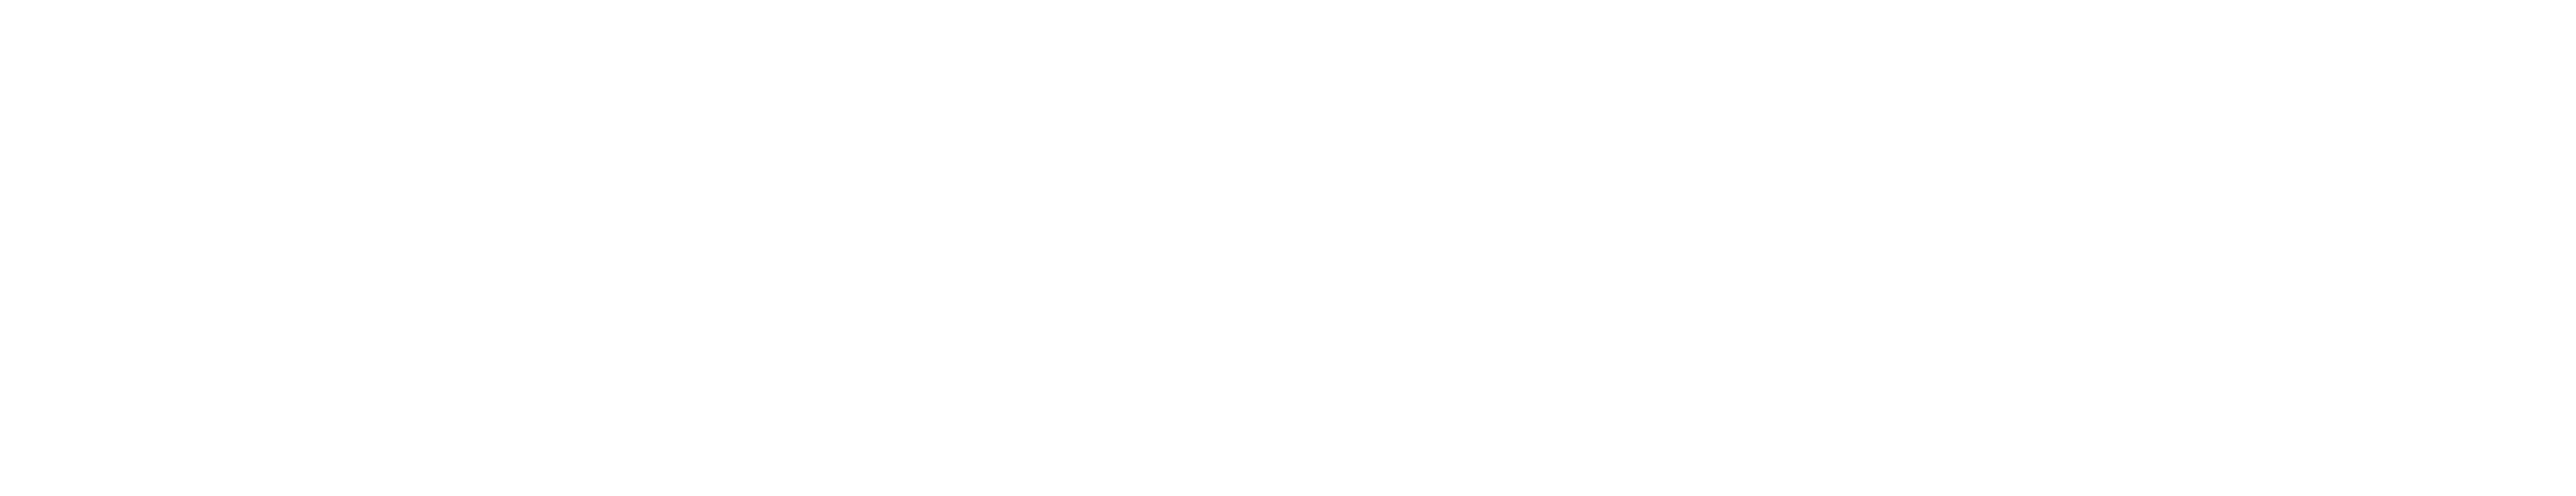 INFOREPAIR.NET Logo